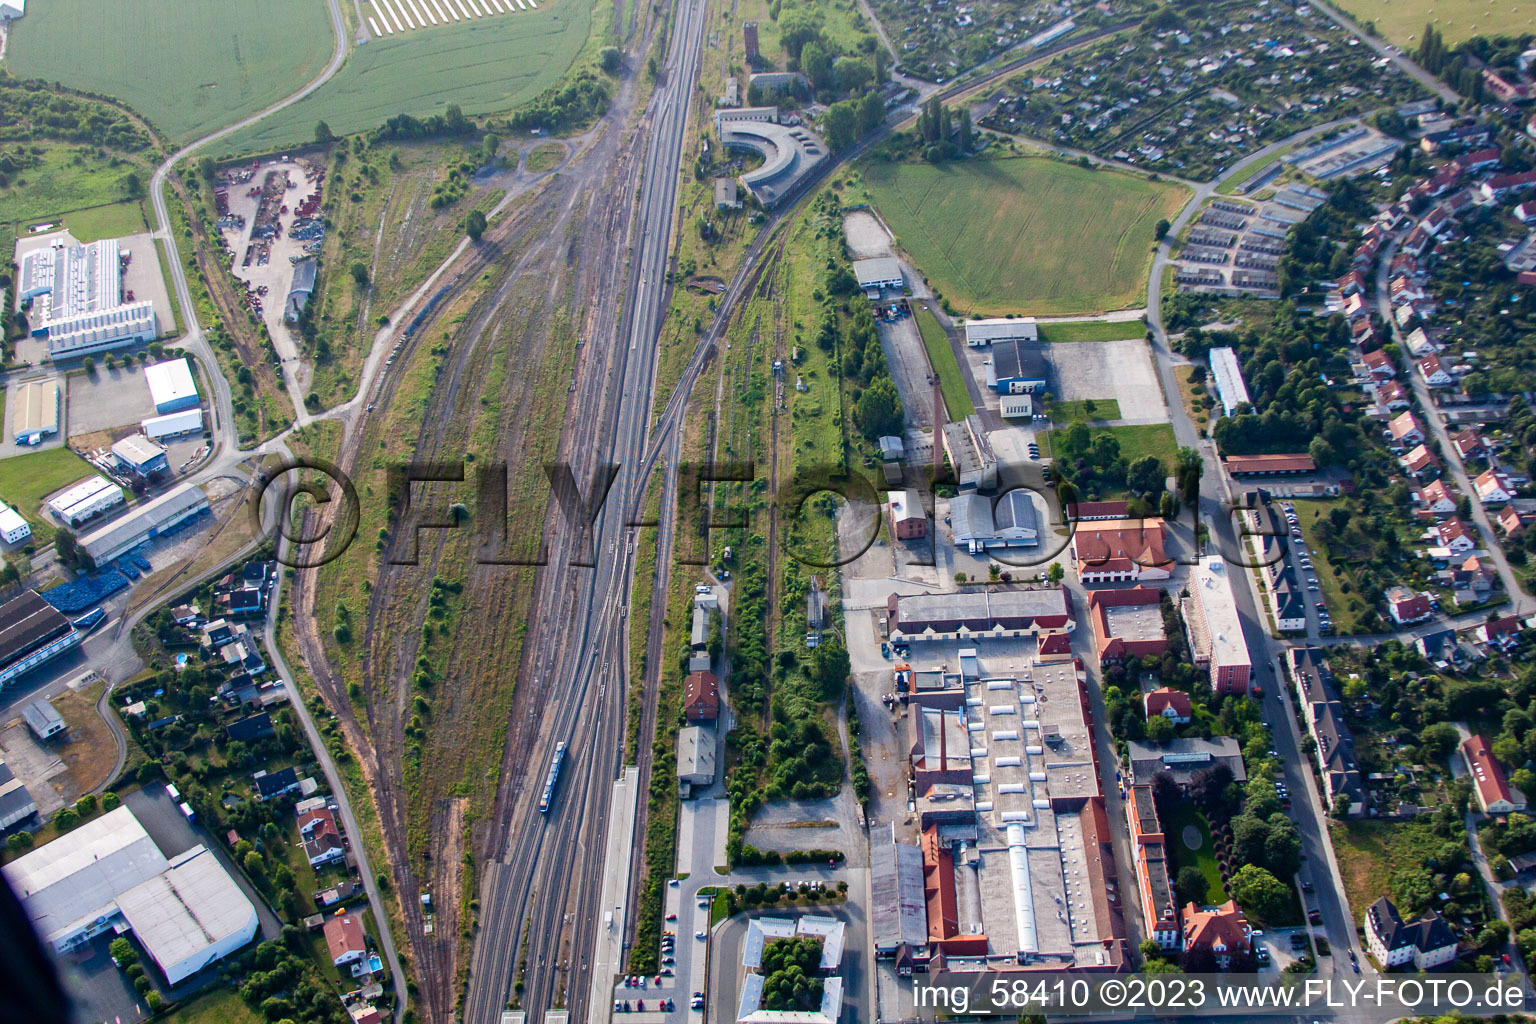 Train tracks in Halberstadt in the state Saxony-Anhalt, Germany